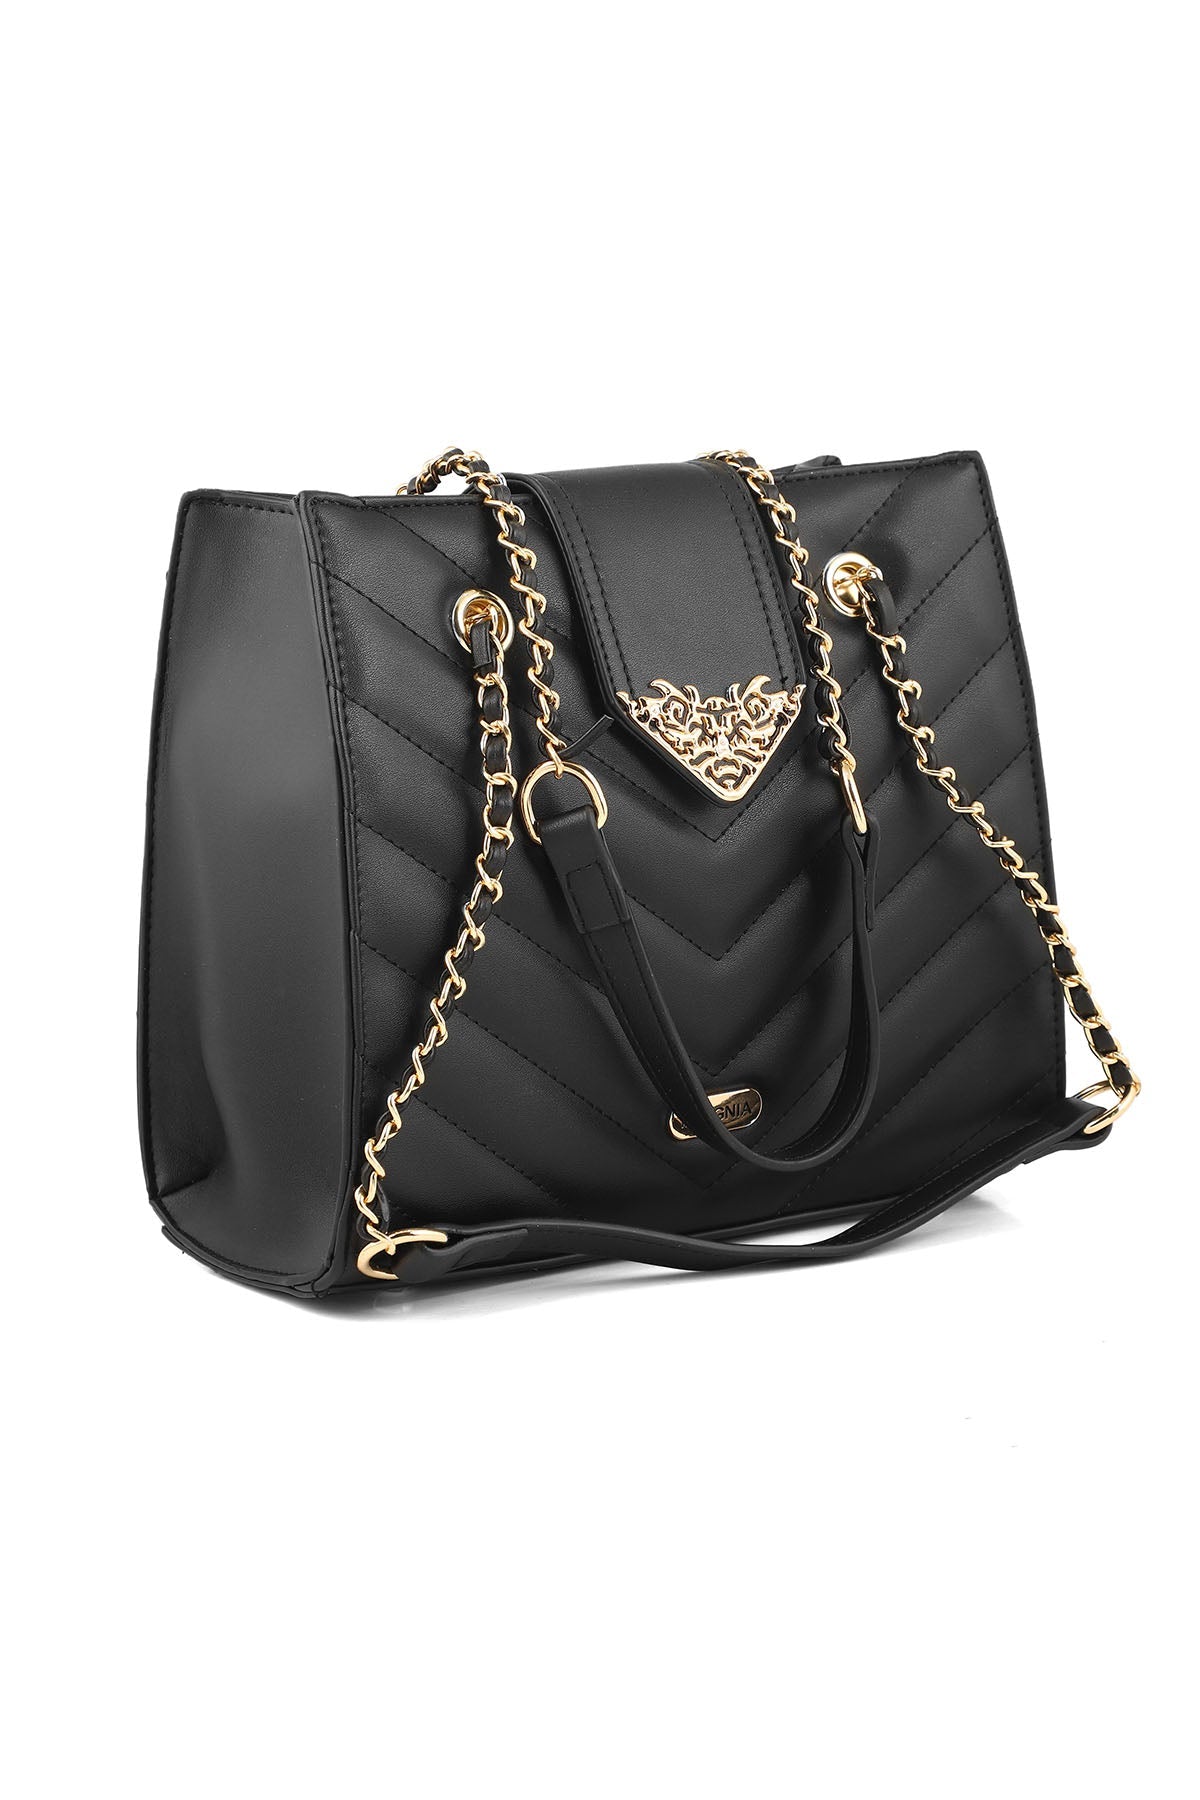 Baguette Shoulder Bags B15127-Black